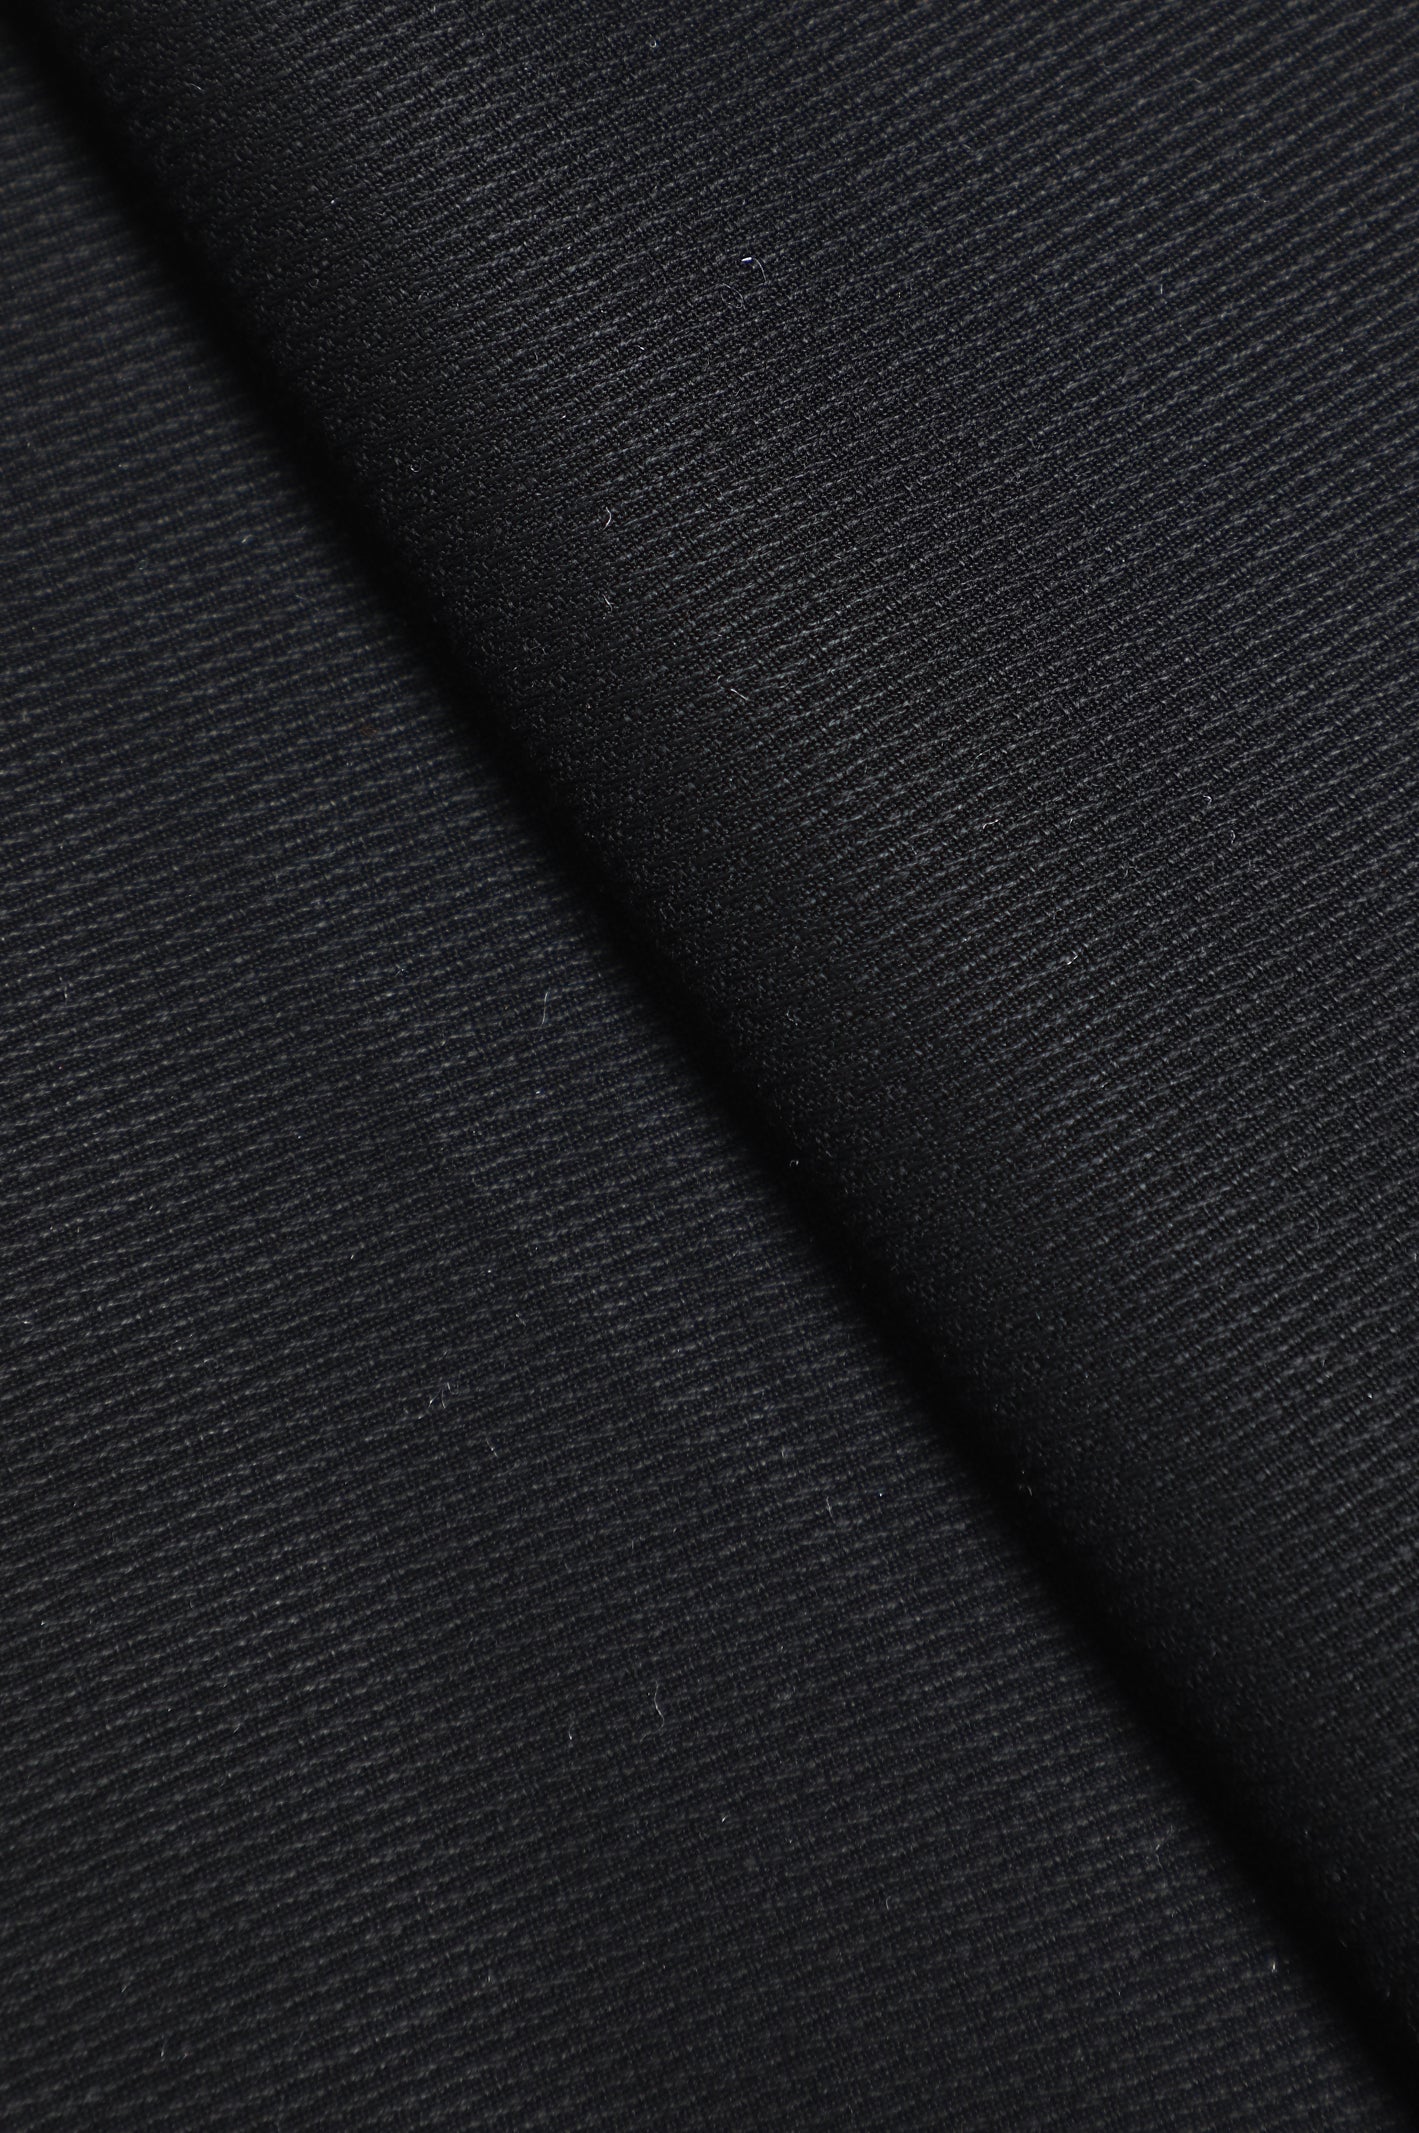 Unstitched Fabric for Men SKU: US0211-BLACK - Diners